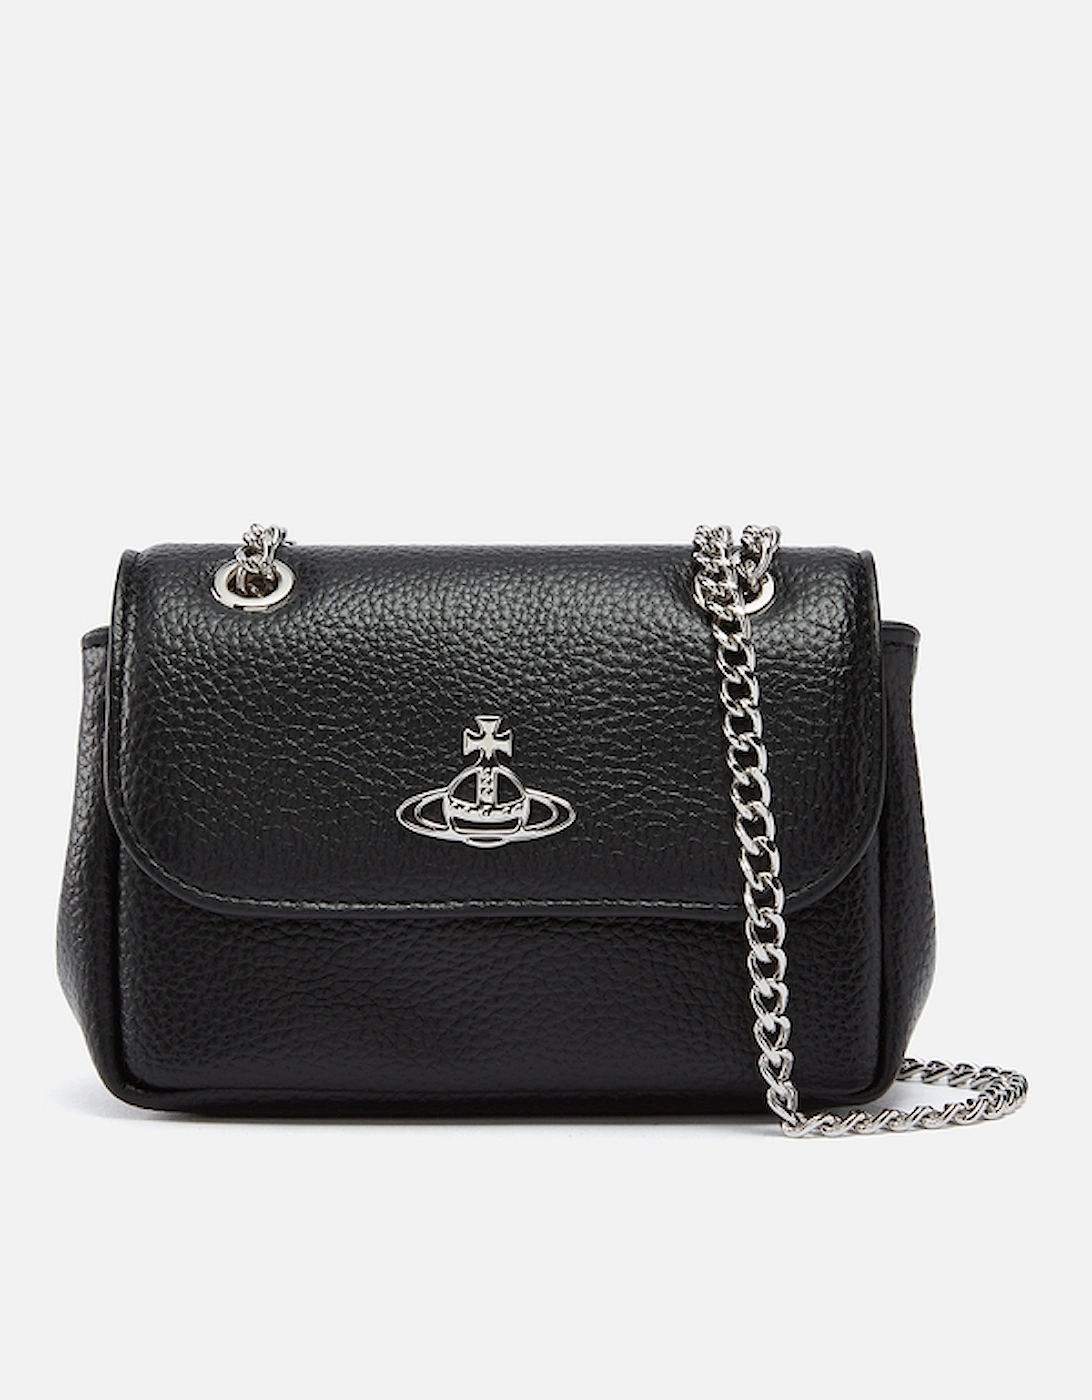 Home - Designer Handbags for Women - Designer Shoulder Bags - Small Vegan Leather Bag - - Small Vegan Leather Bag, 2 of 1